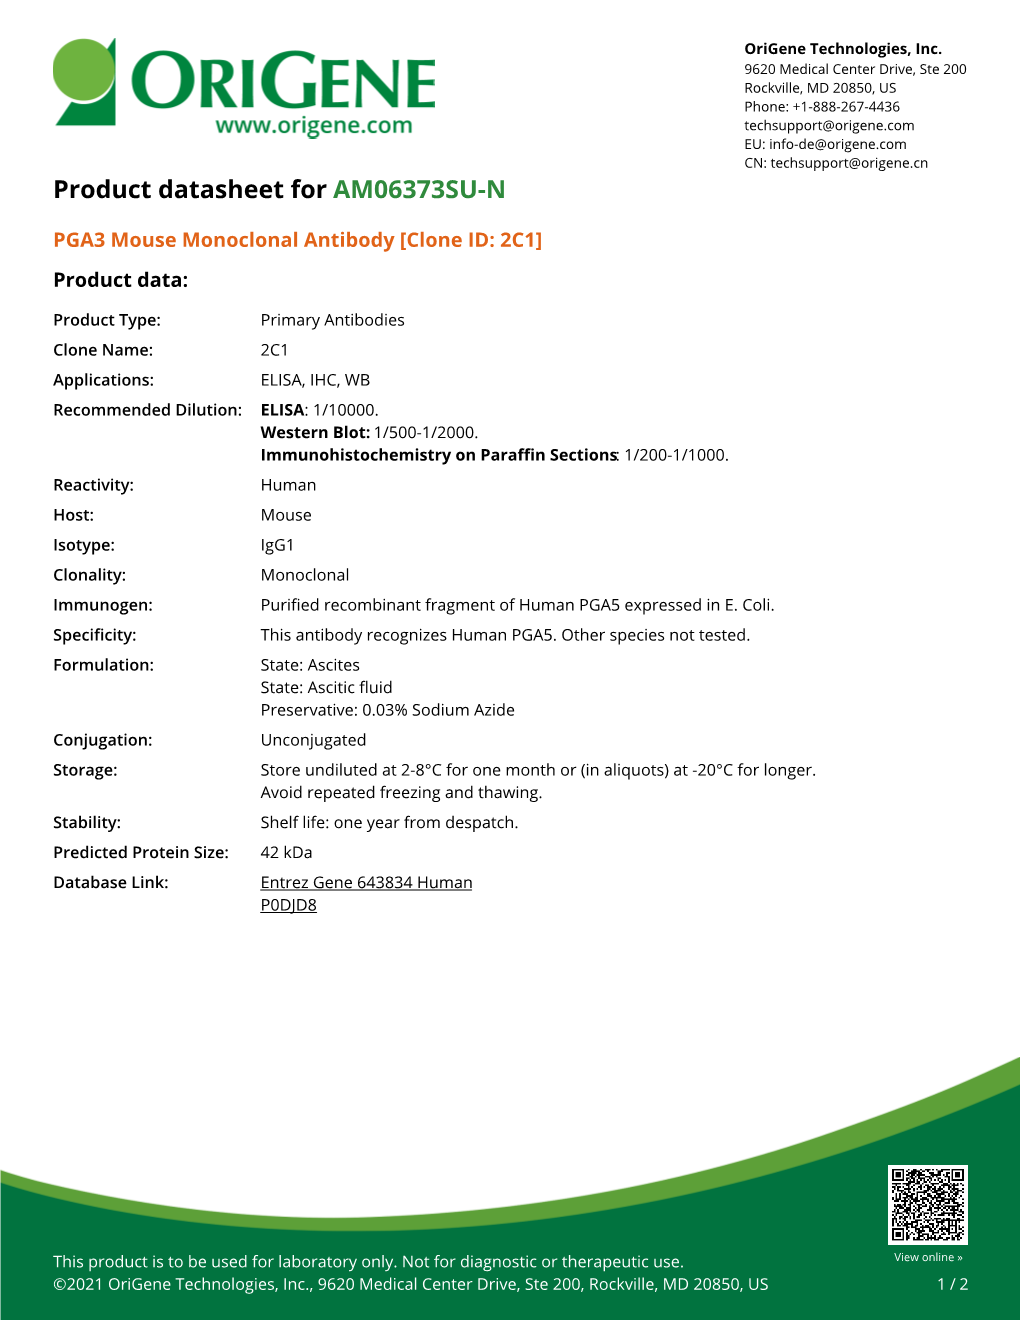 PGA3 Mouse Monoclonal Antibody [Clone ID: 2C1] Product Data